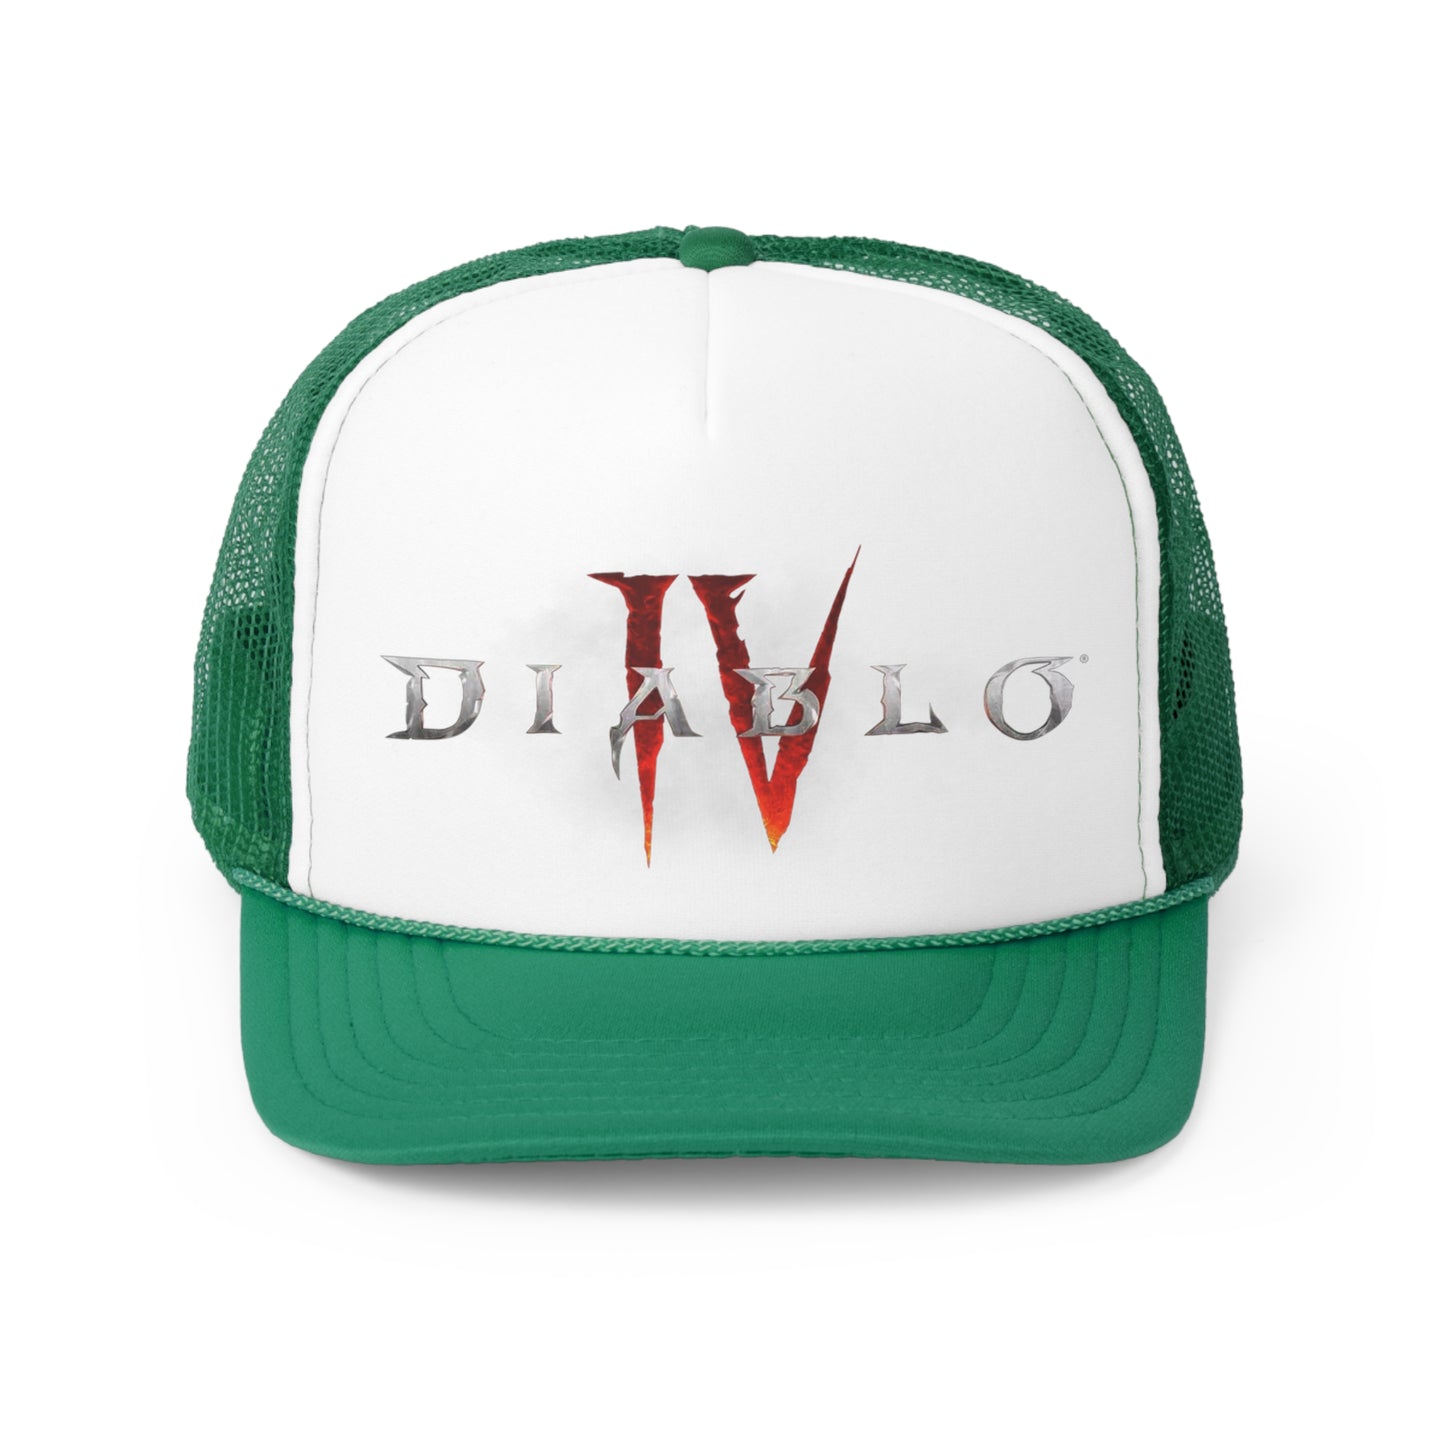 Diablo IV Trucker Caps